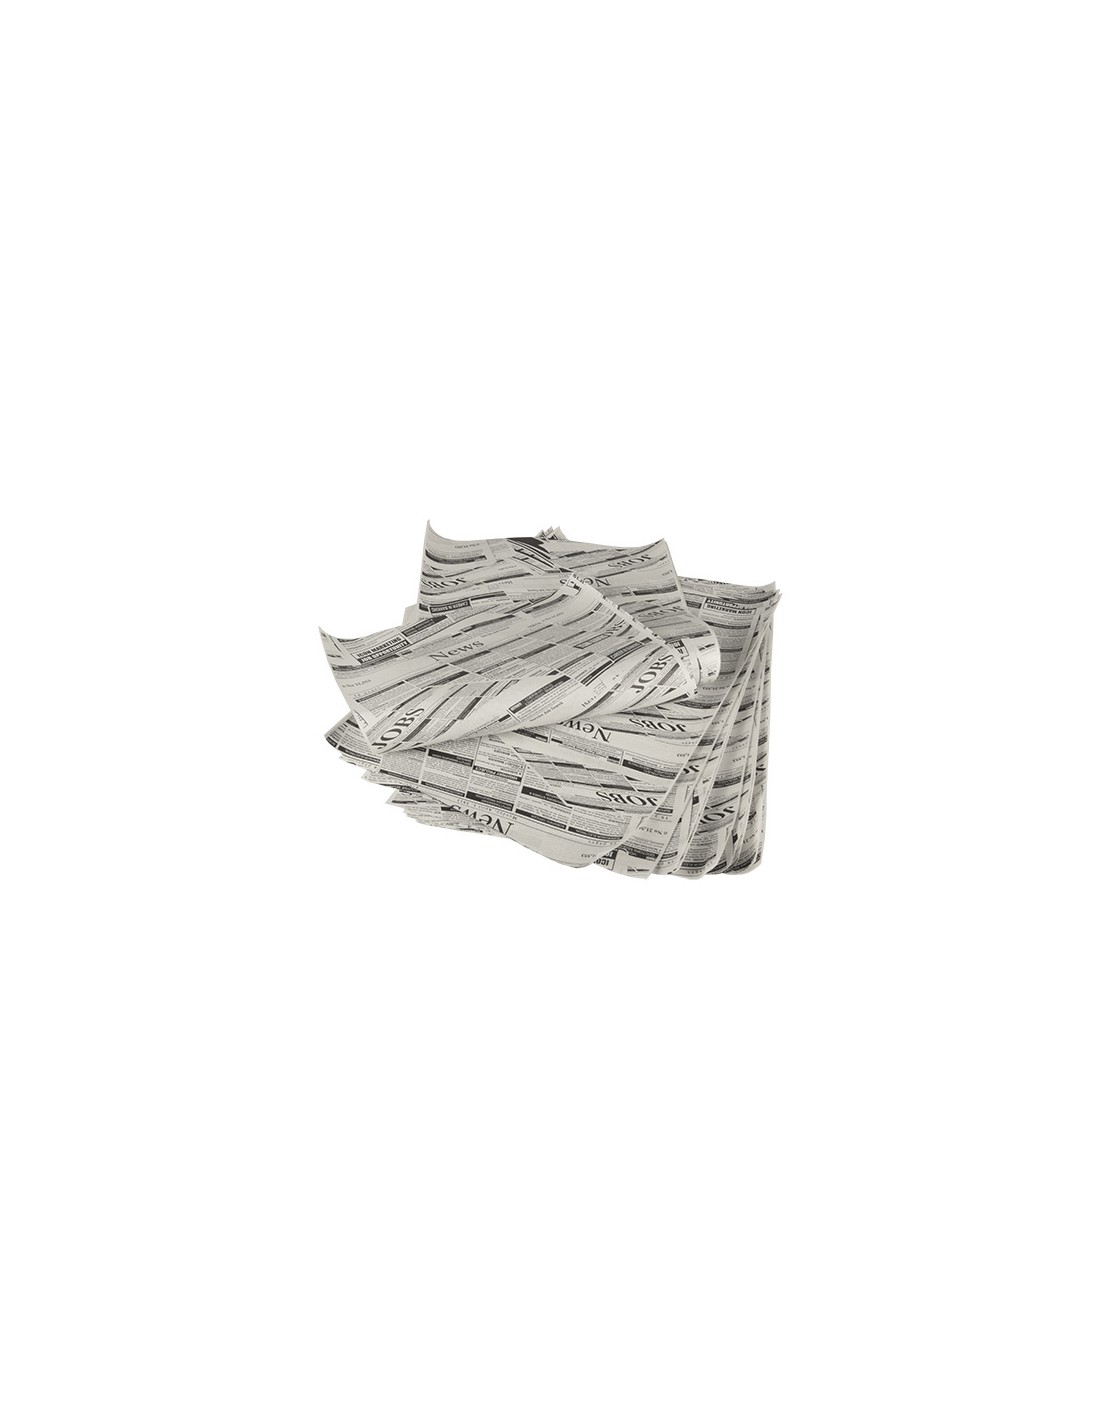 hojas de papel antigrasa apto para alimentos, impreso para